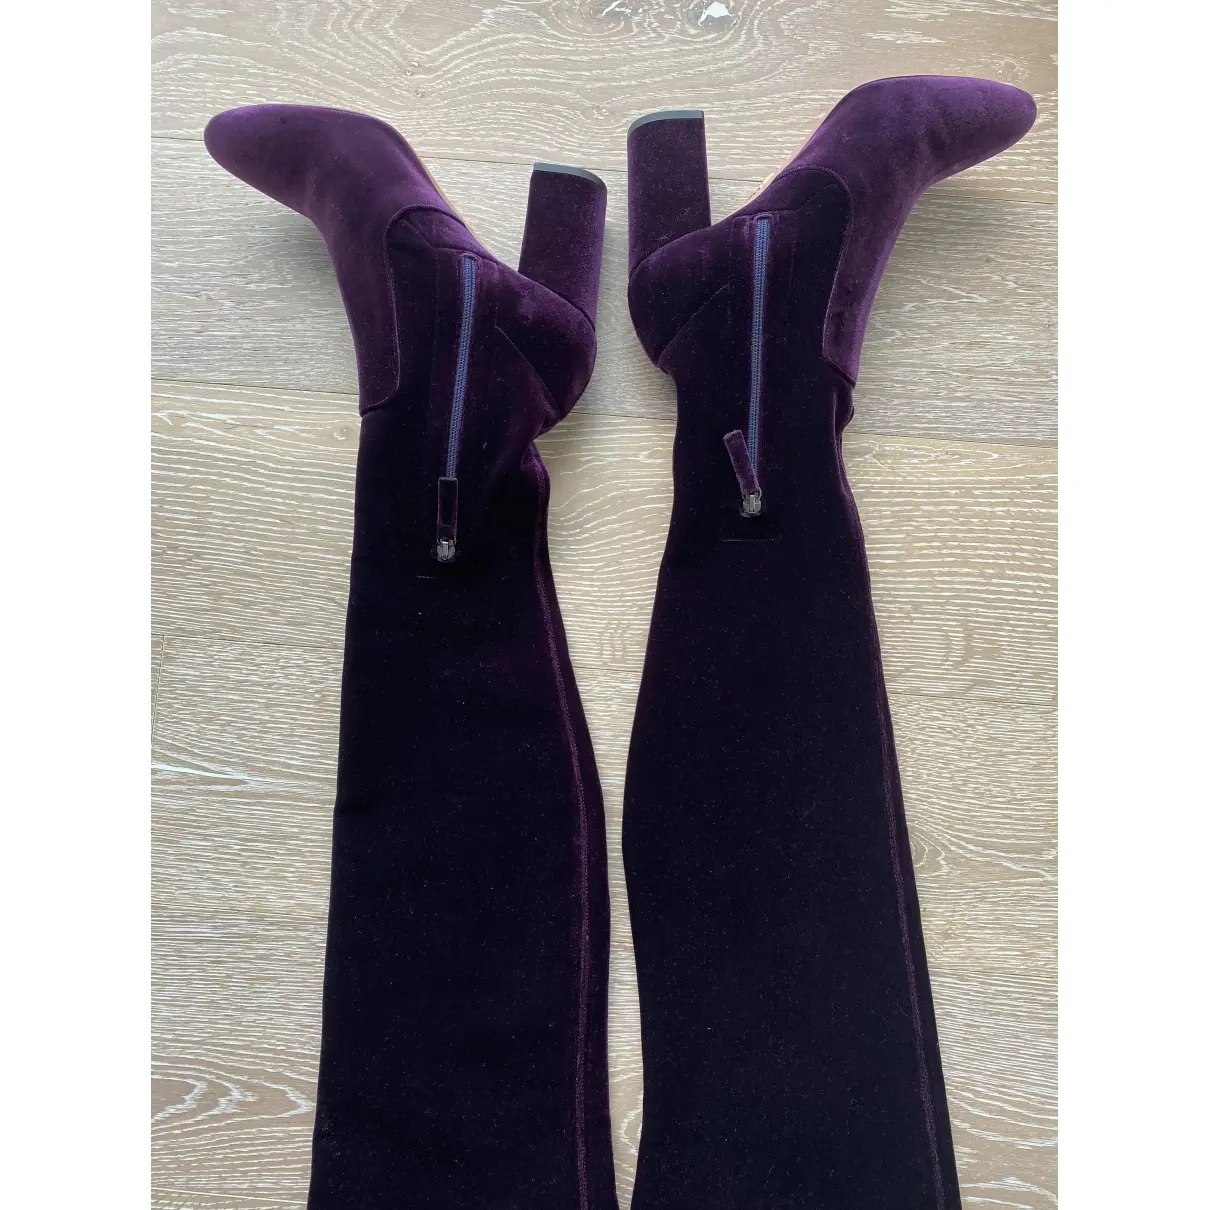 Buy Aquazzura Cloth ankle boots online